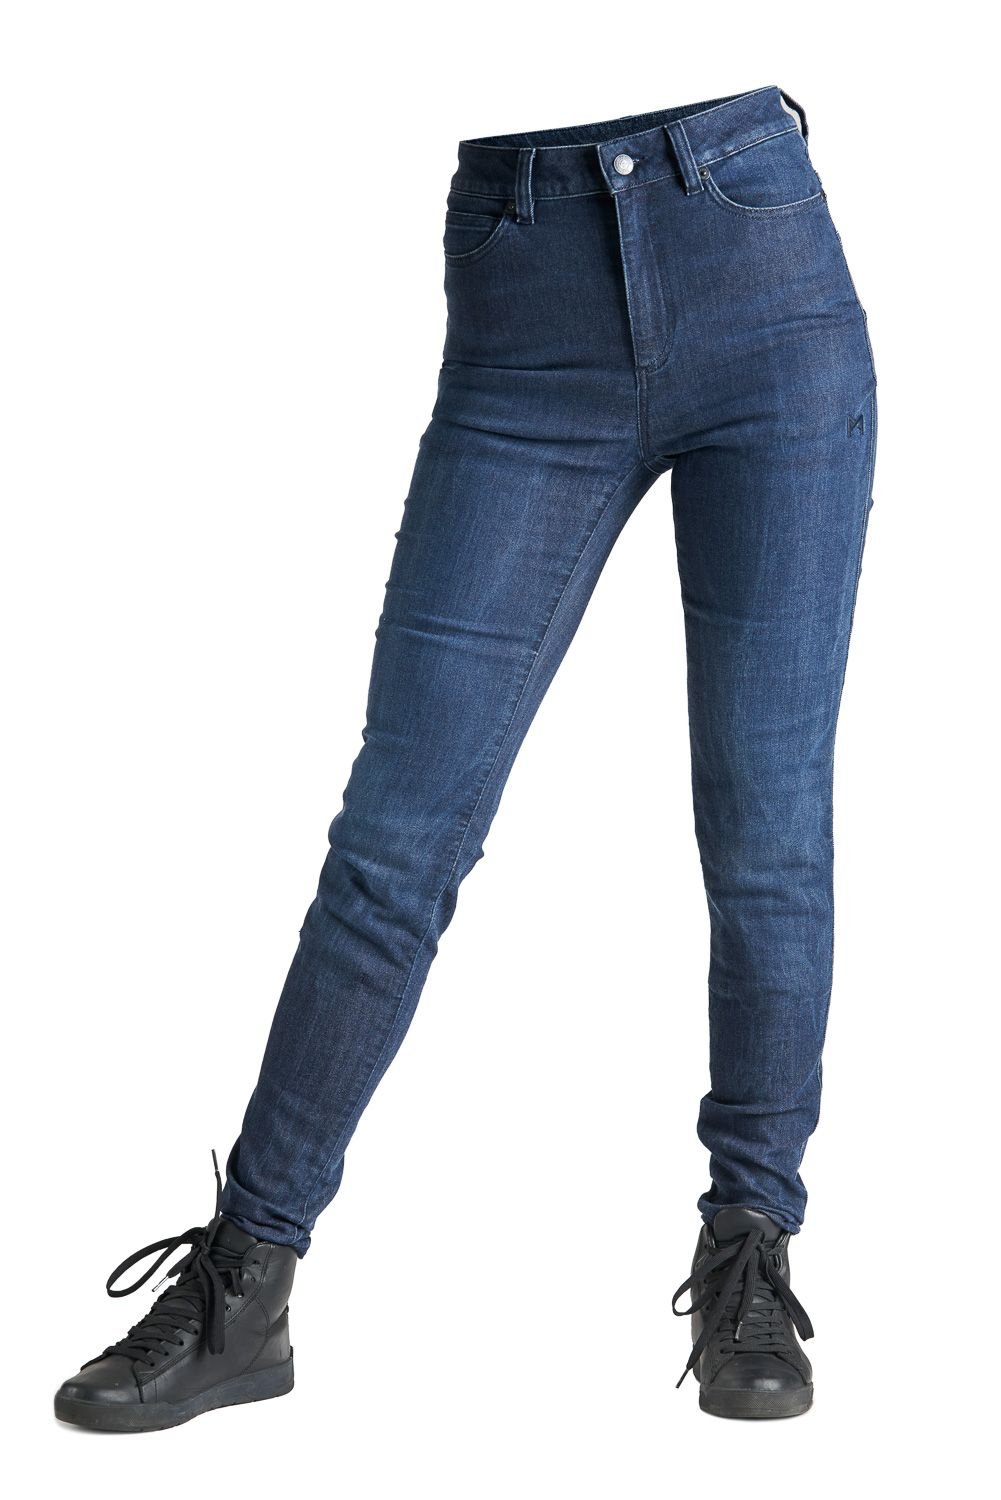 Image of Pando Moto Kusari Cor 02 Women Motorcycle Jeans Skinny-Fit Cordura Size W31/L32 ID 7851049505284